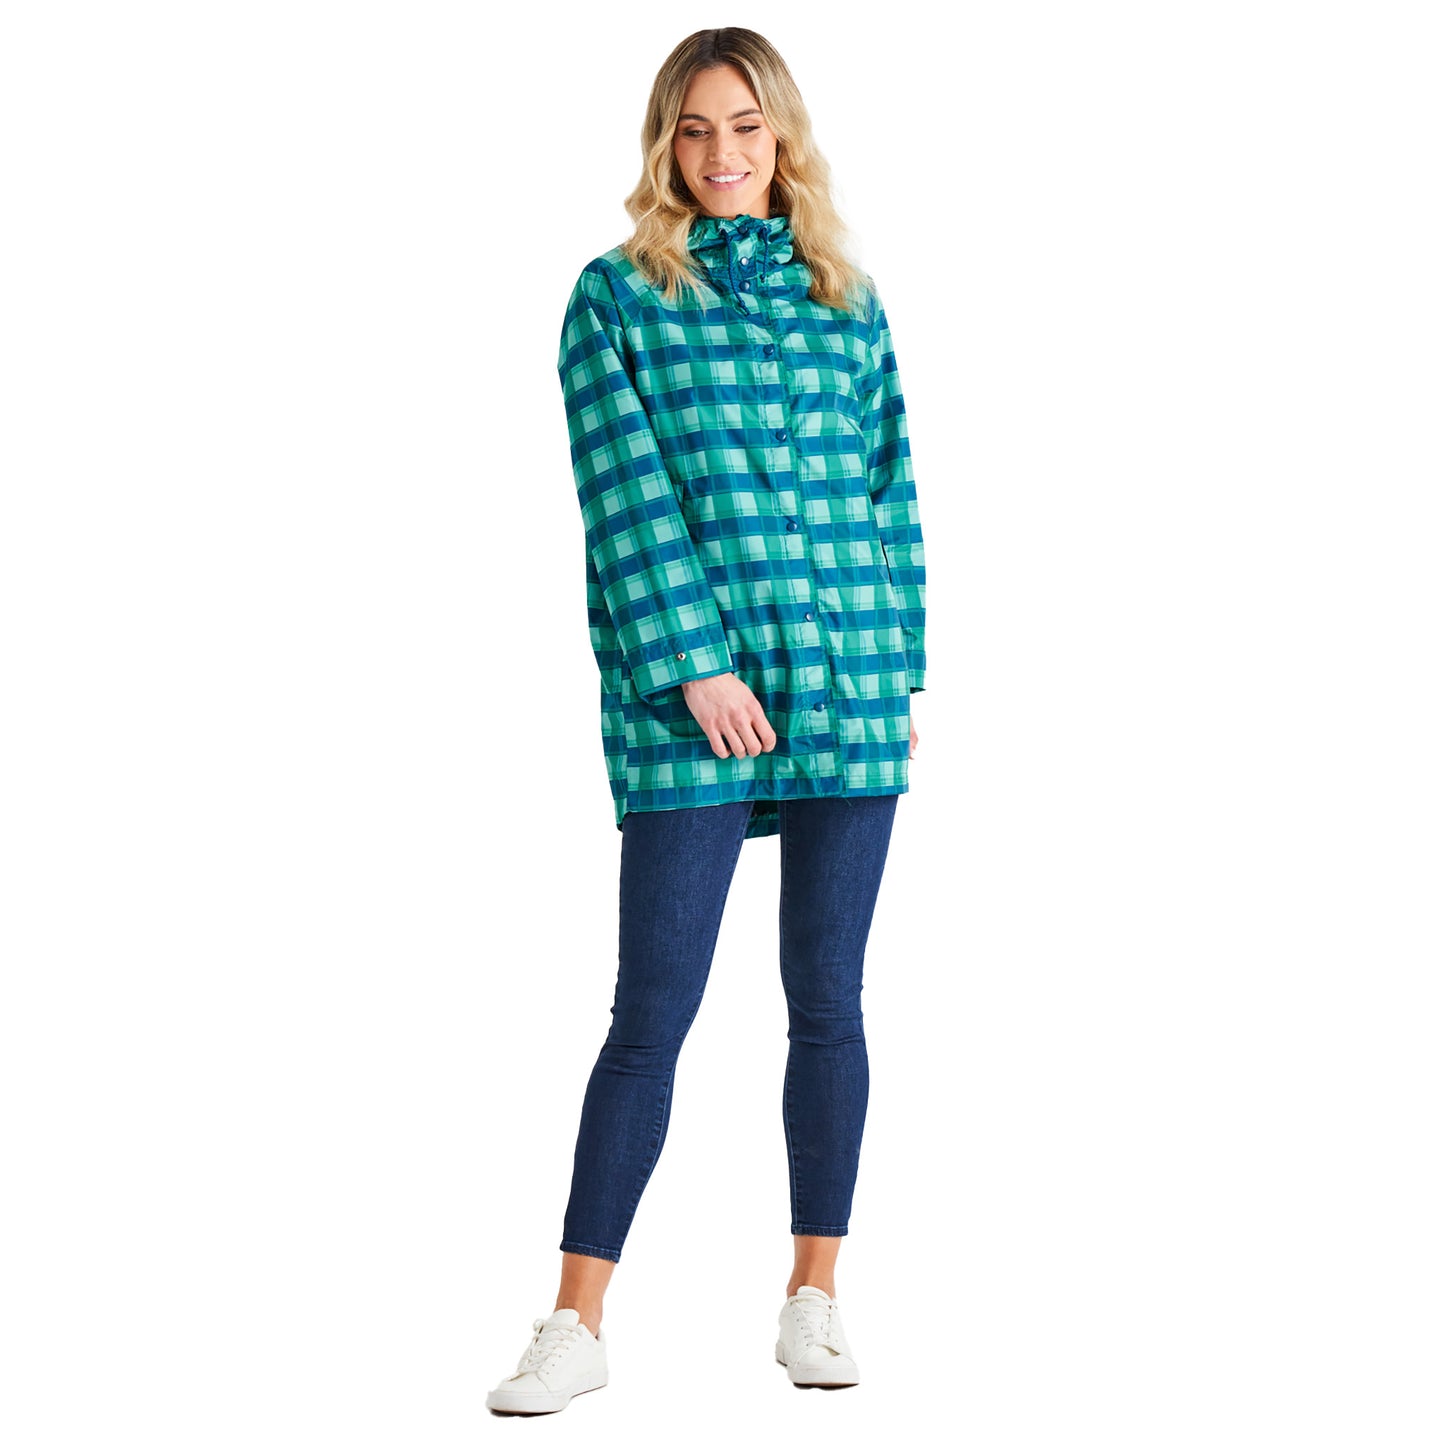 Rosie Relaxed Waterproof Raincoat - Green & Blue Tartan Check